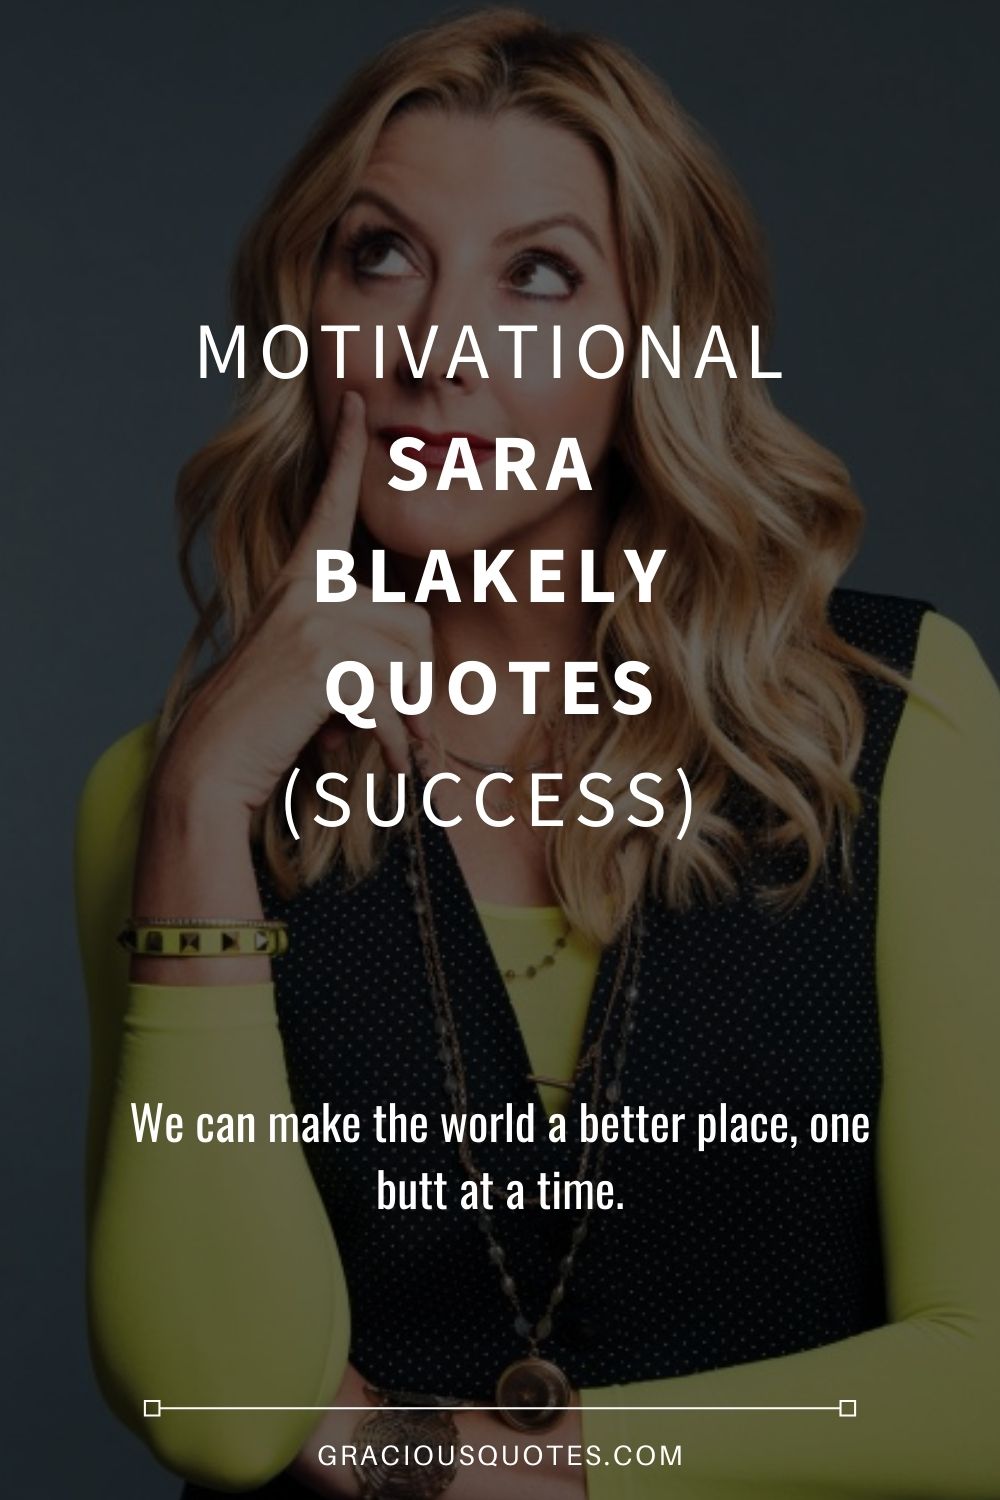 47 Motivational Sara Blakely Quotes (SUCCESS)